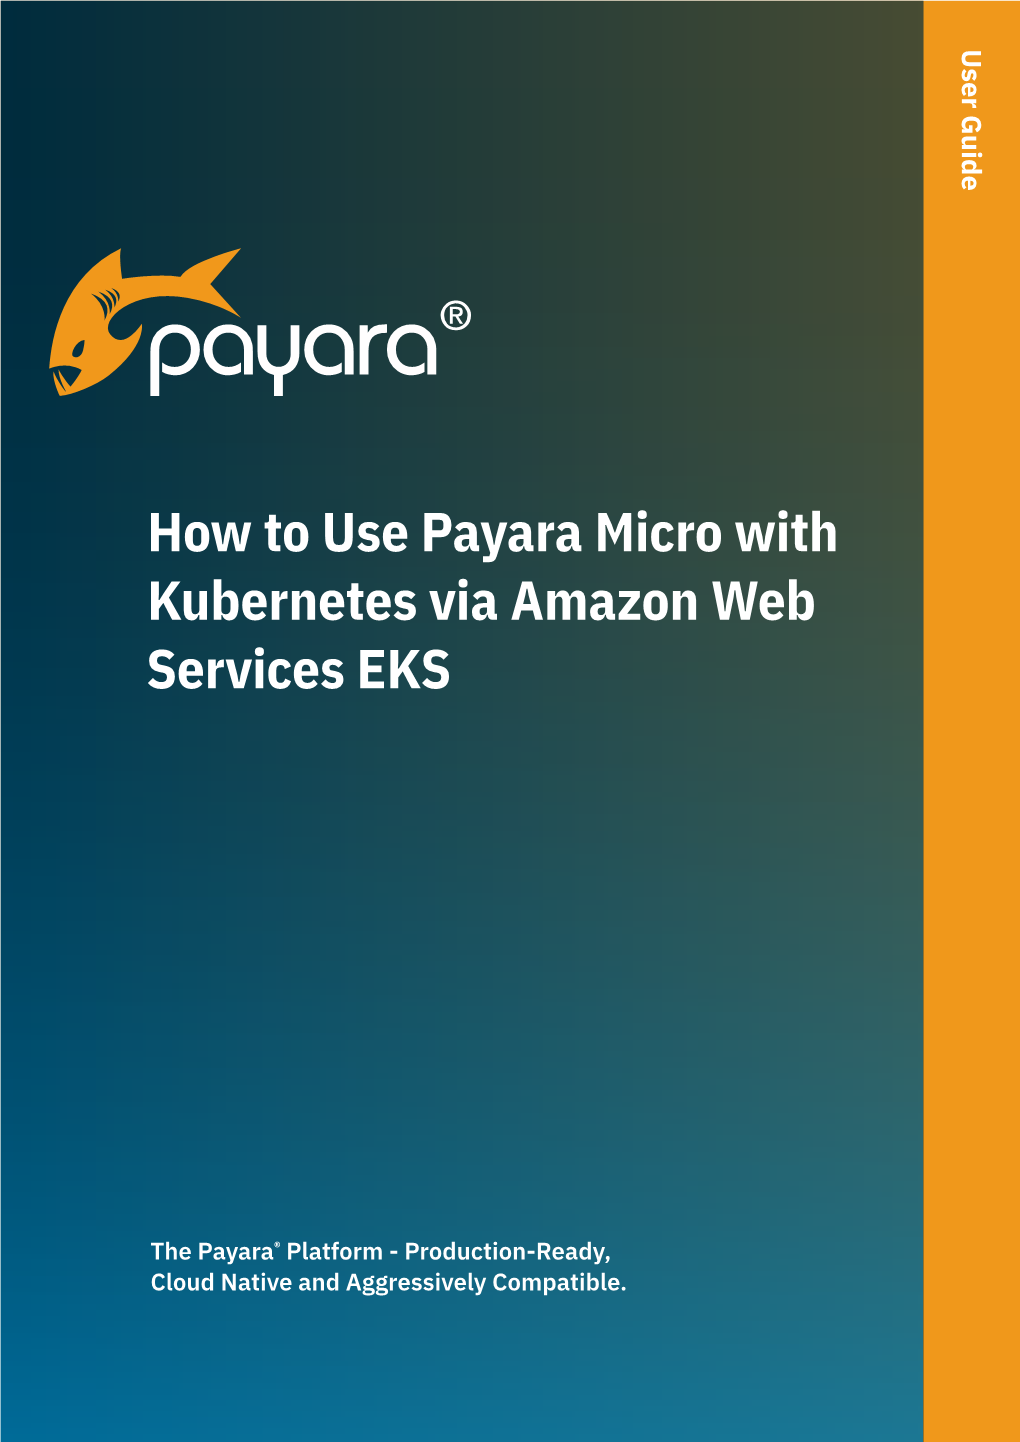 How to Use Payara Micro with Kubernetes Via Amazon Web Services EKS